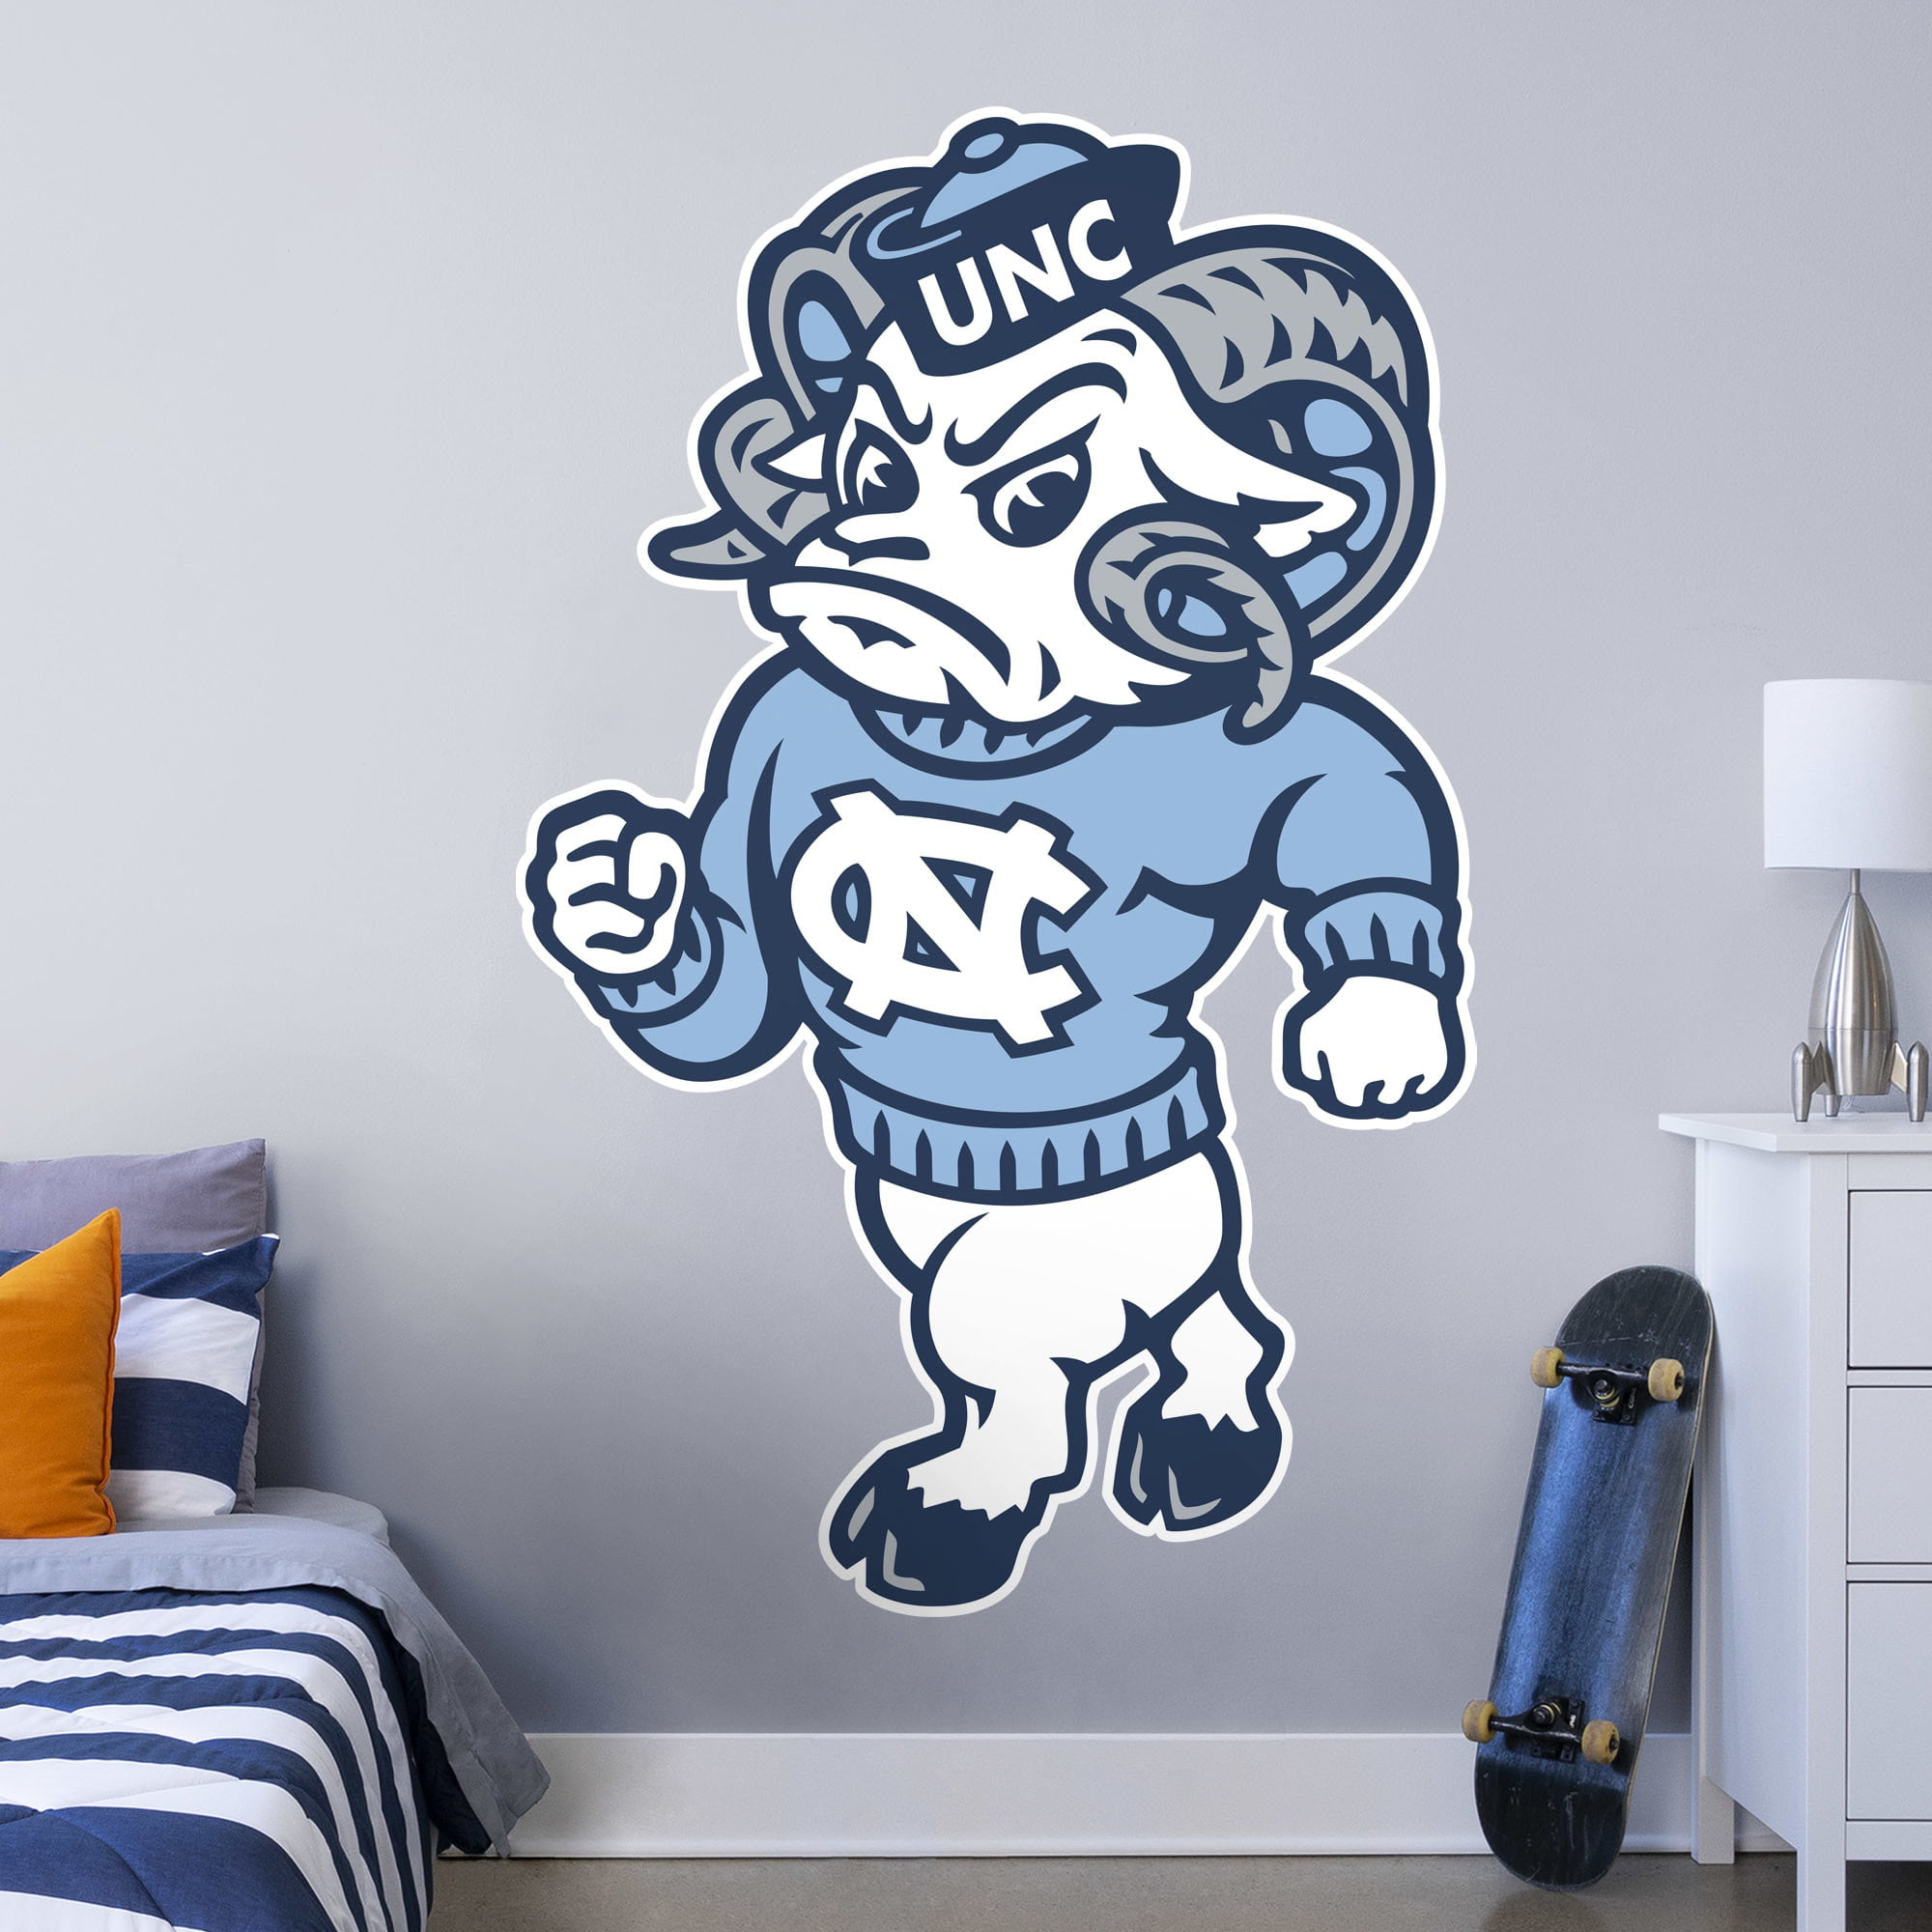 North Carolina Mascot Sticker by UNC Tar Heels